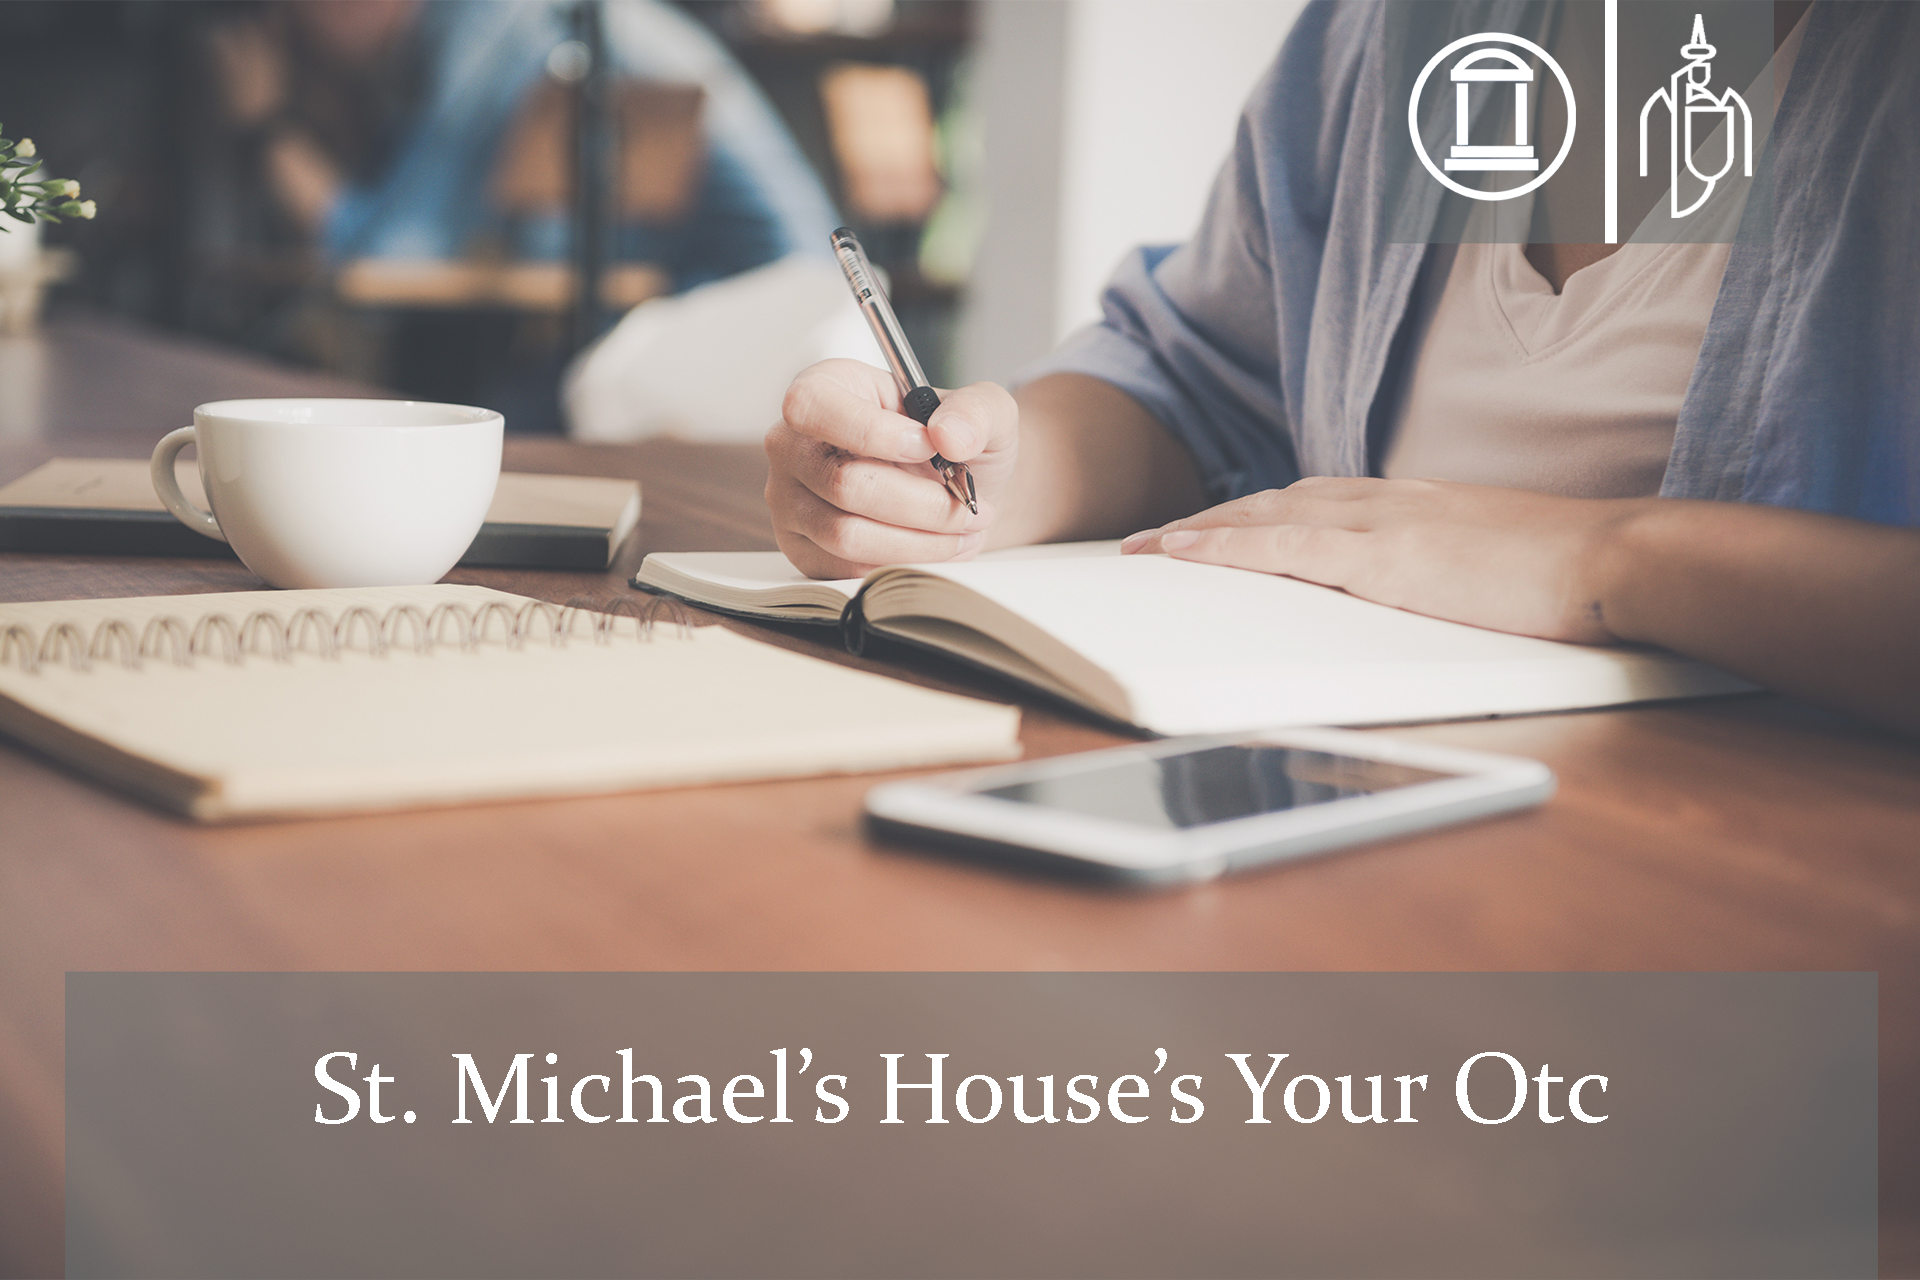 St. Michael’s House’s Your Otc